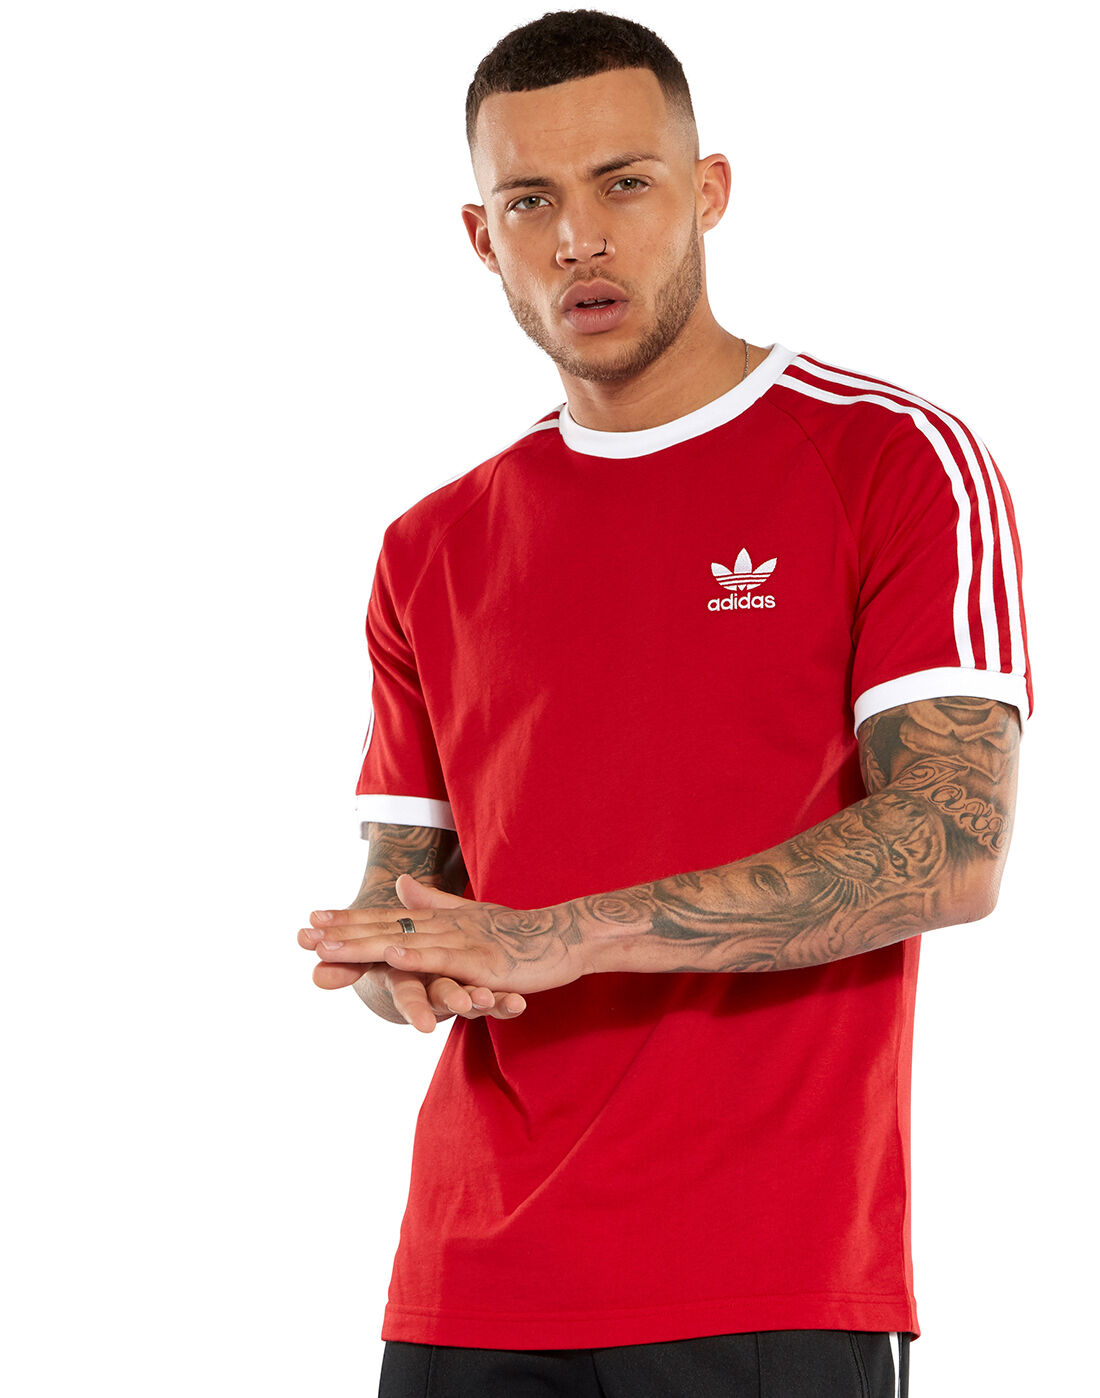 Men's Red adidas Originals 3-Stripe T-Shirt | Life Style Sports